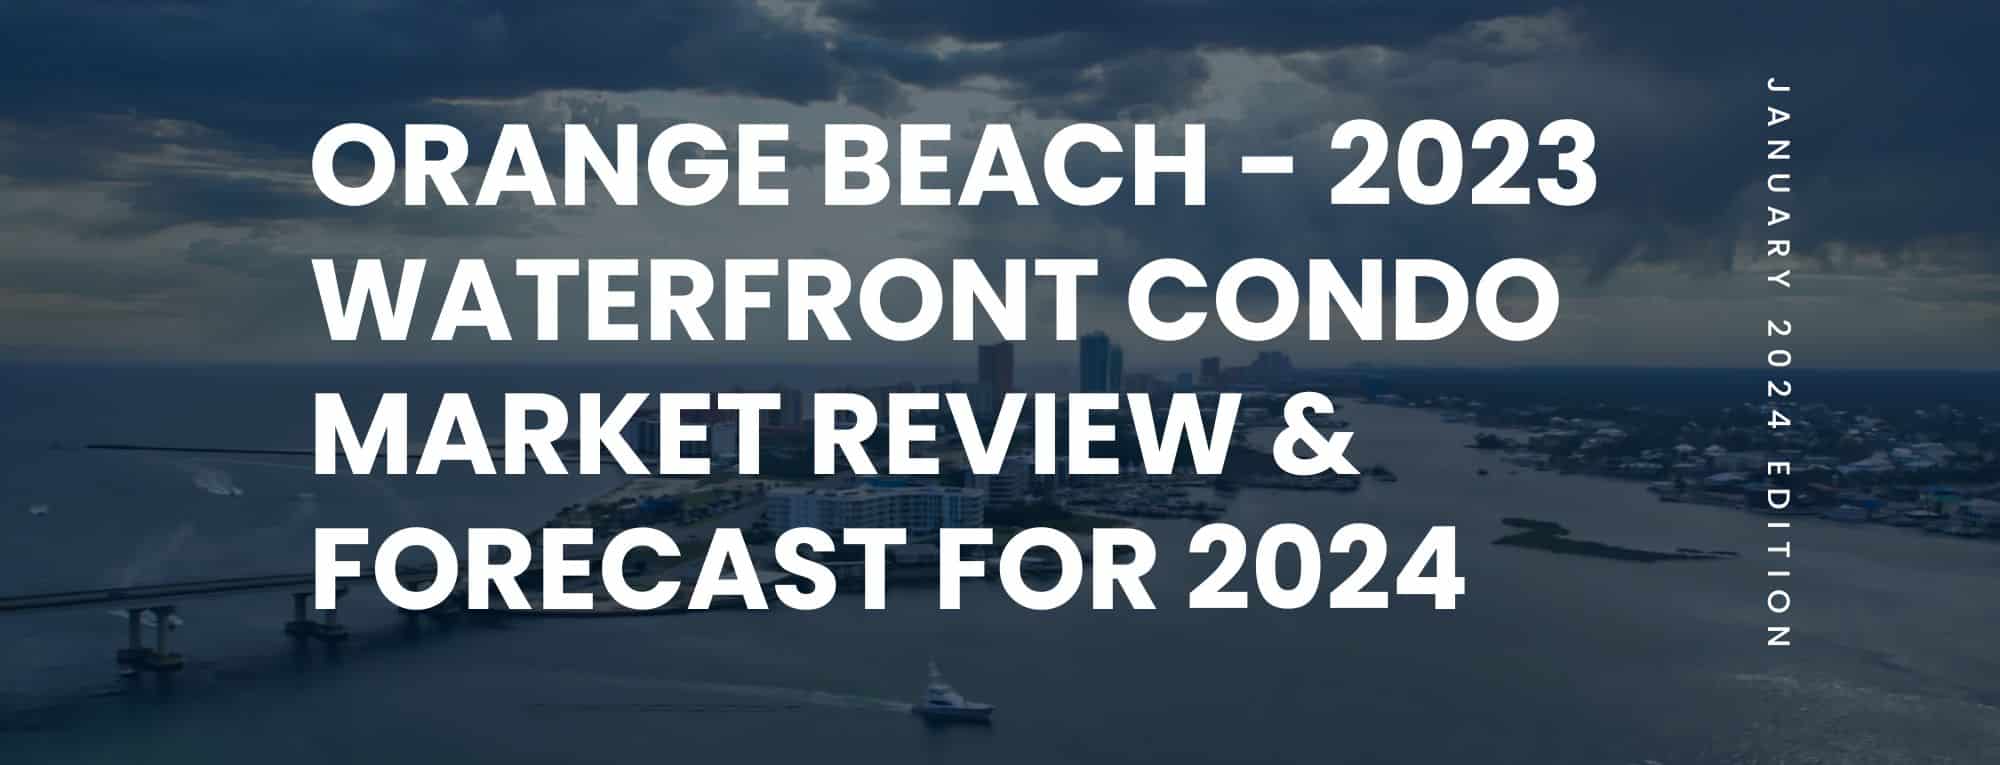 Orange Beach Waterfront Condo Market Review for 2023